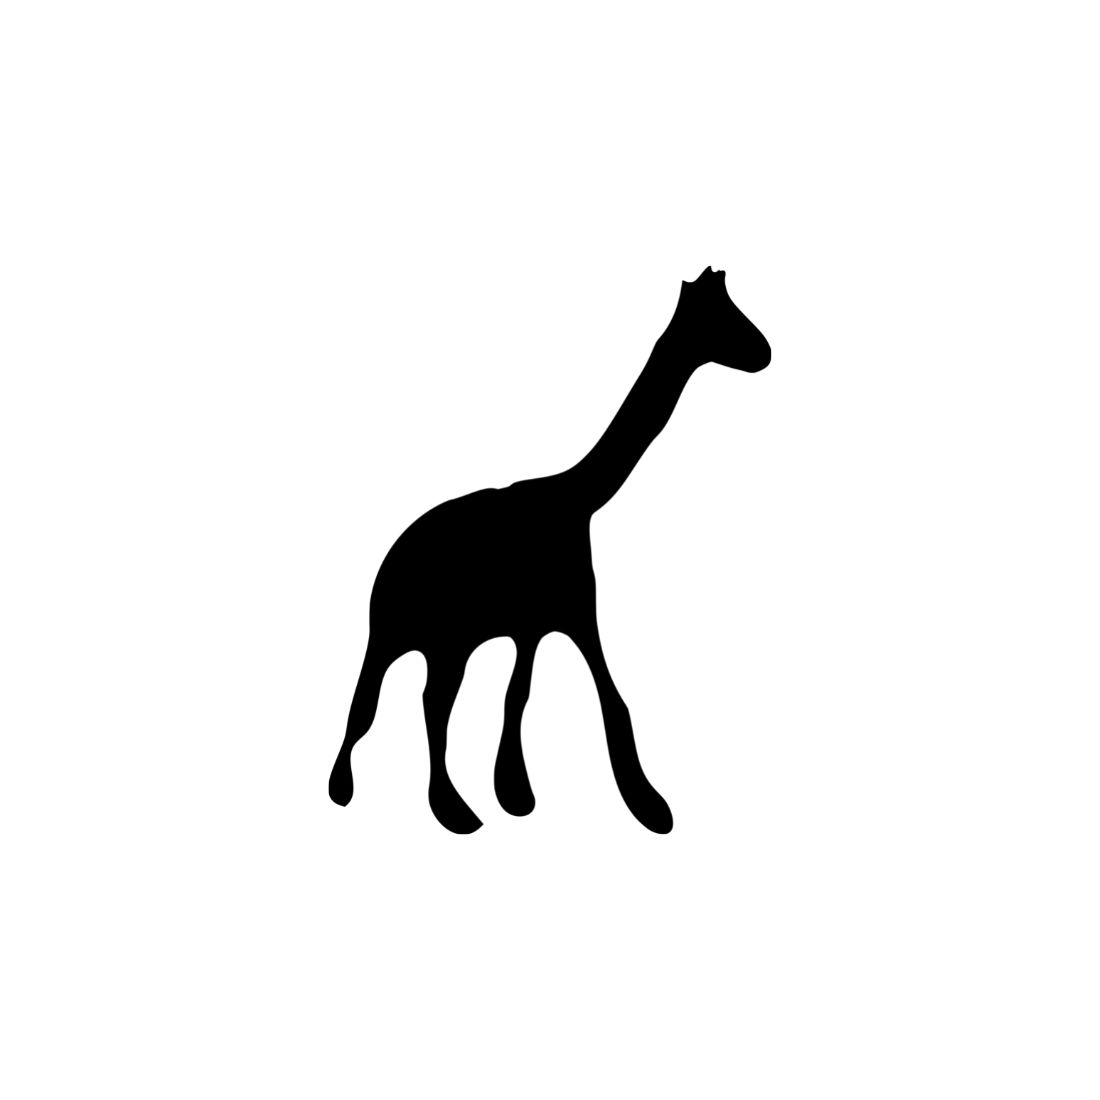 Giraffe Silhouette Bundles for your design.